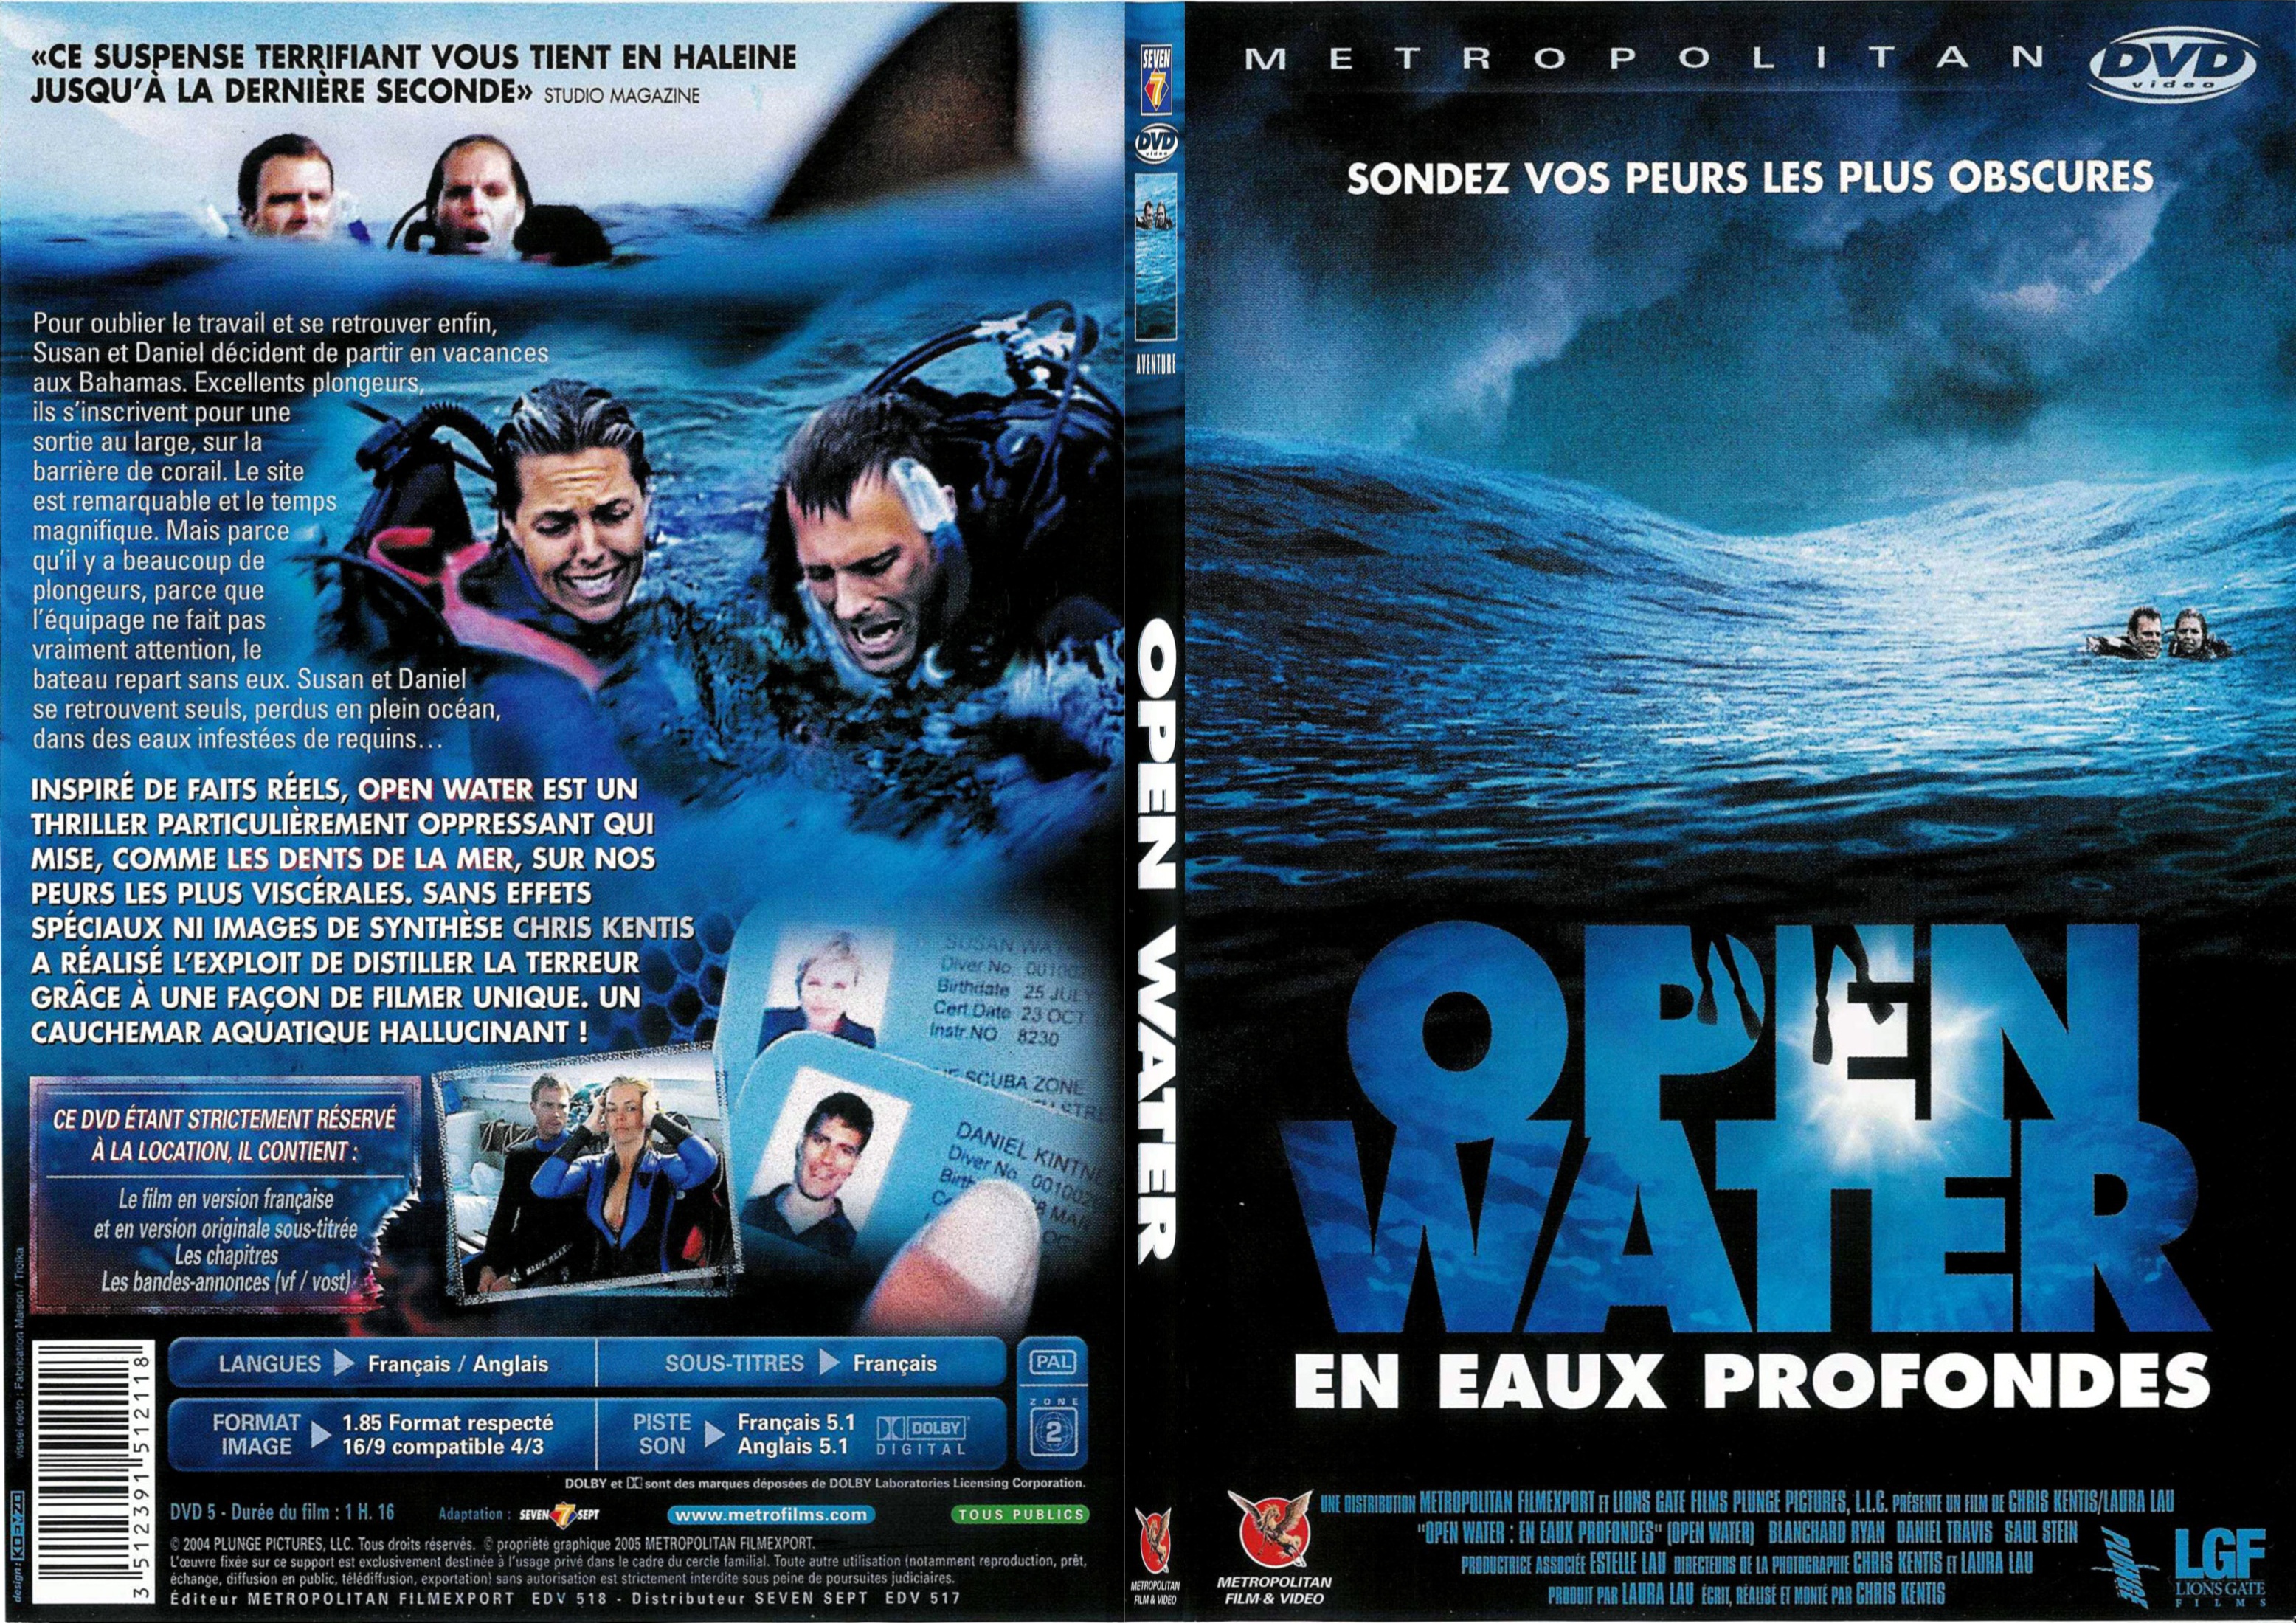 Jaquette DVD Open water - SLIM v2